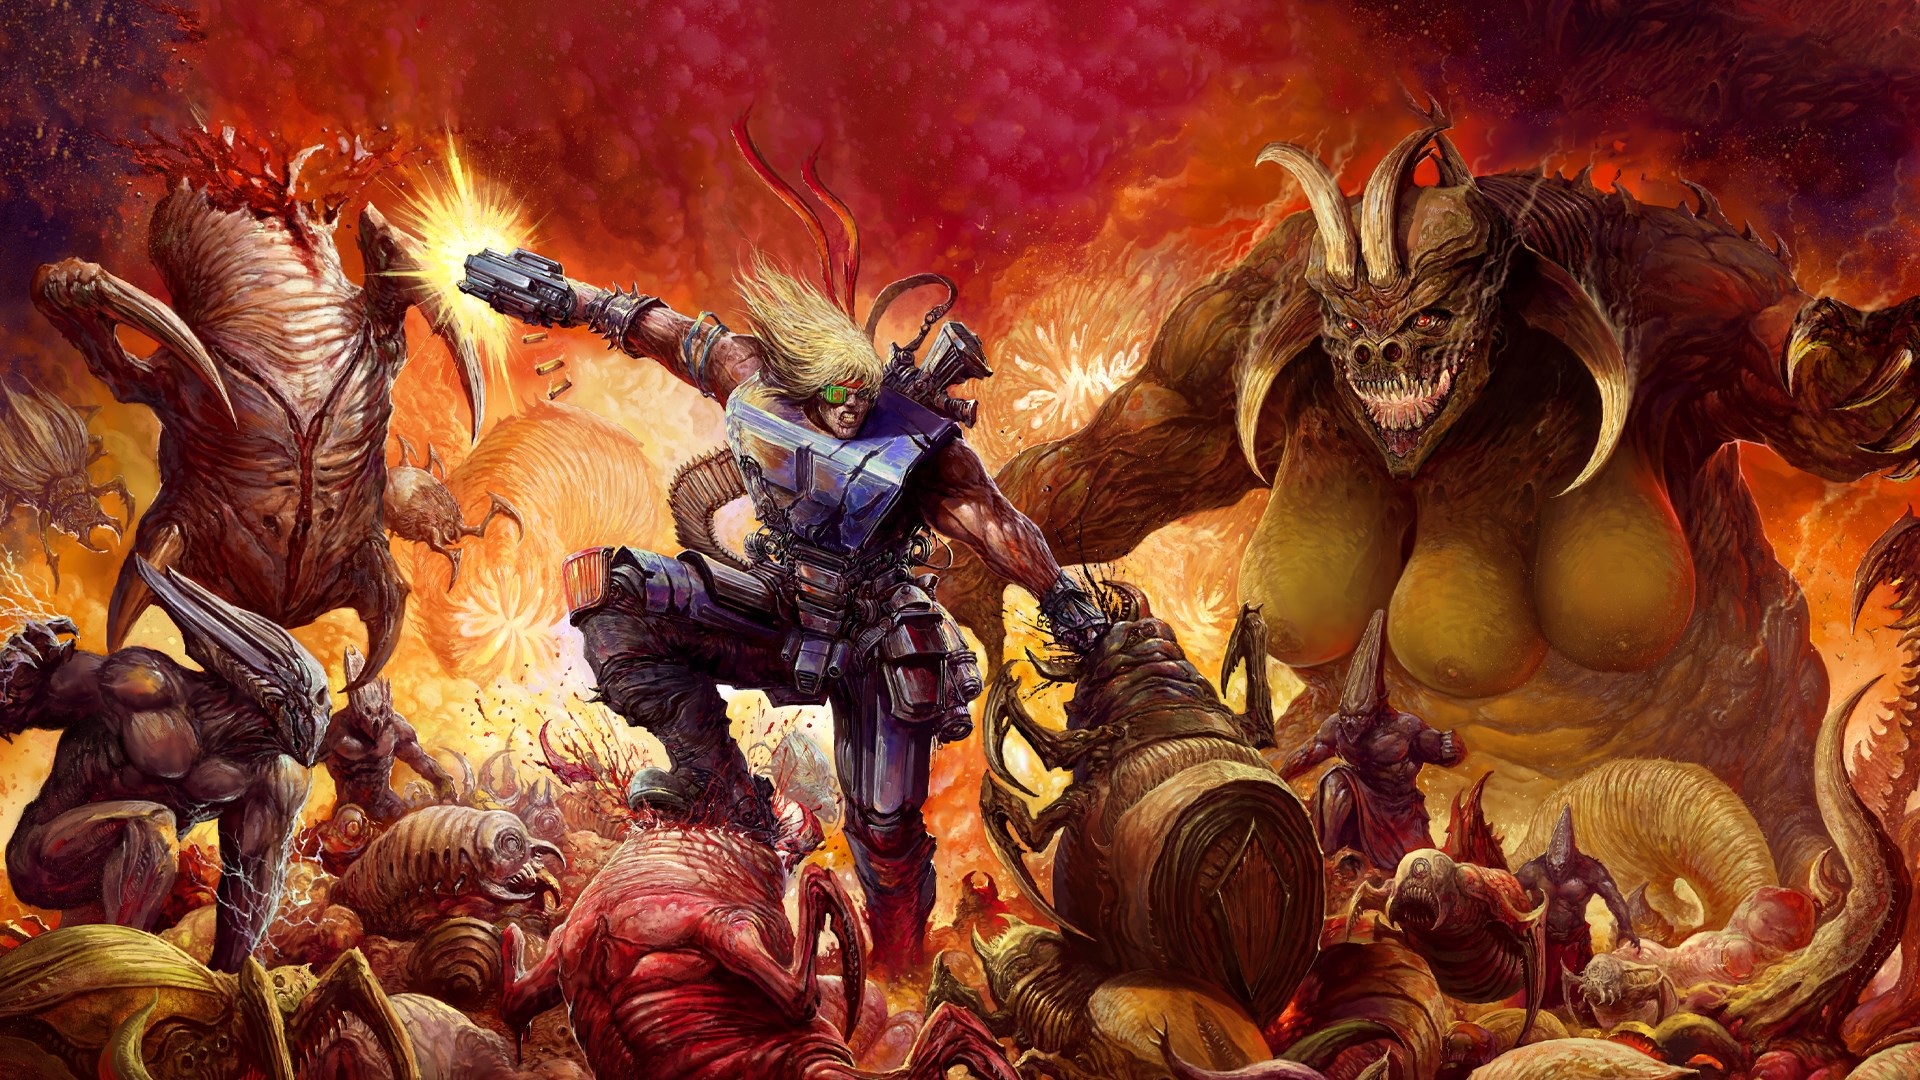 SturmFront: The Mutant War: Übel Edition